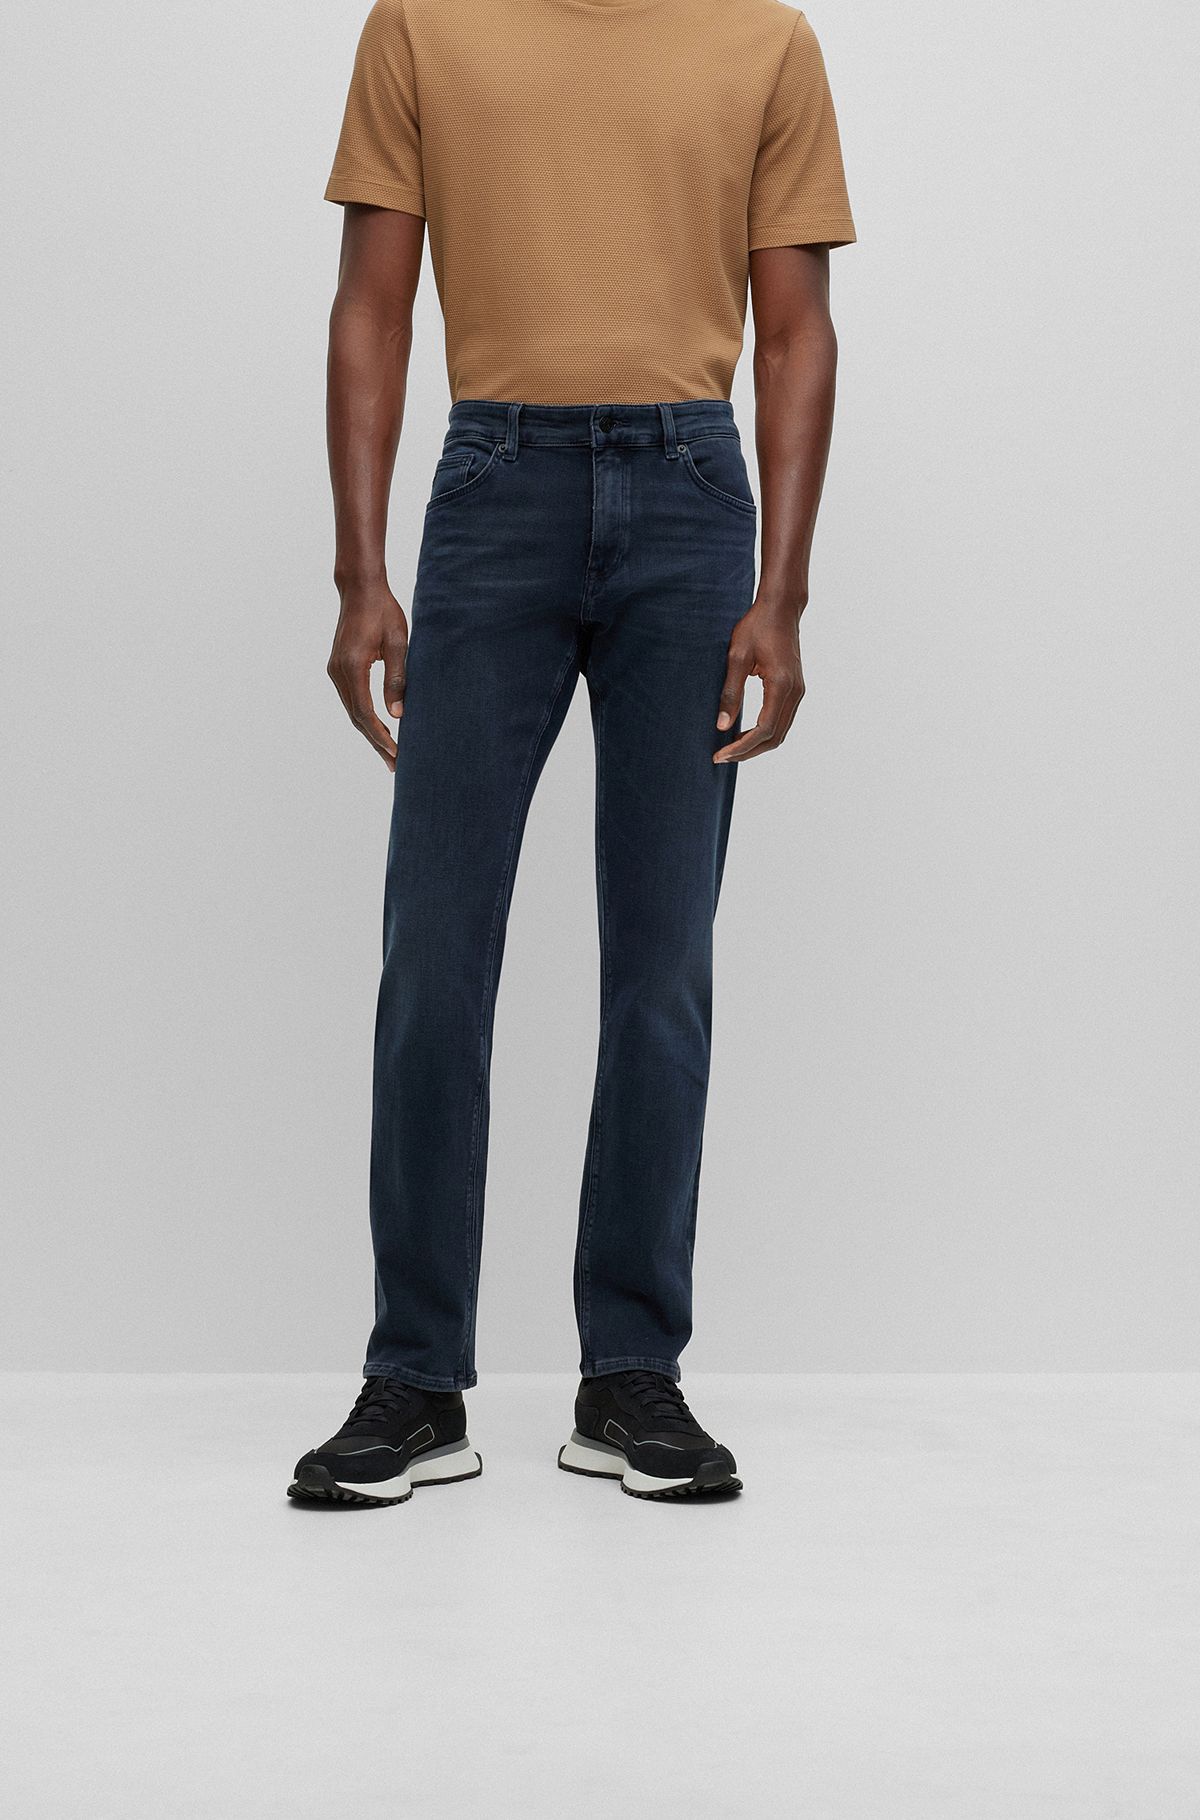 Regular-fit jeans in coal-navy denim, Dark Blue